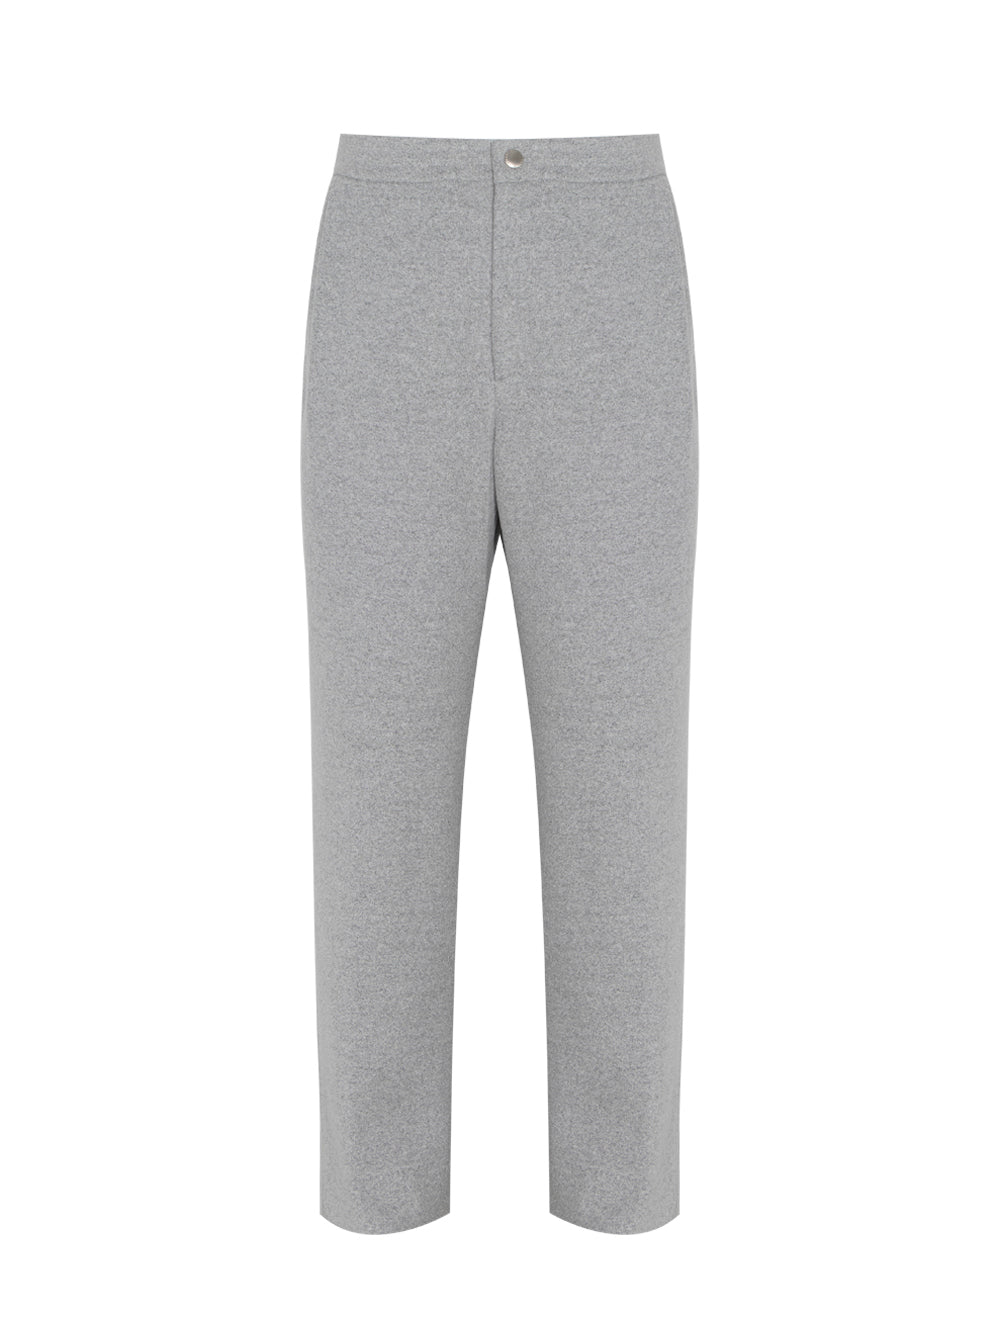 Banding Sweatpants (Grey)